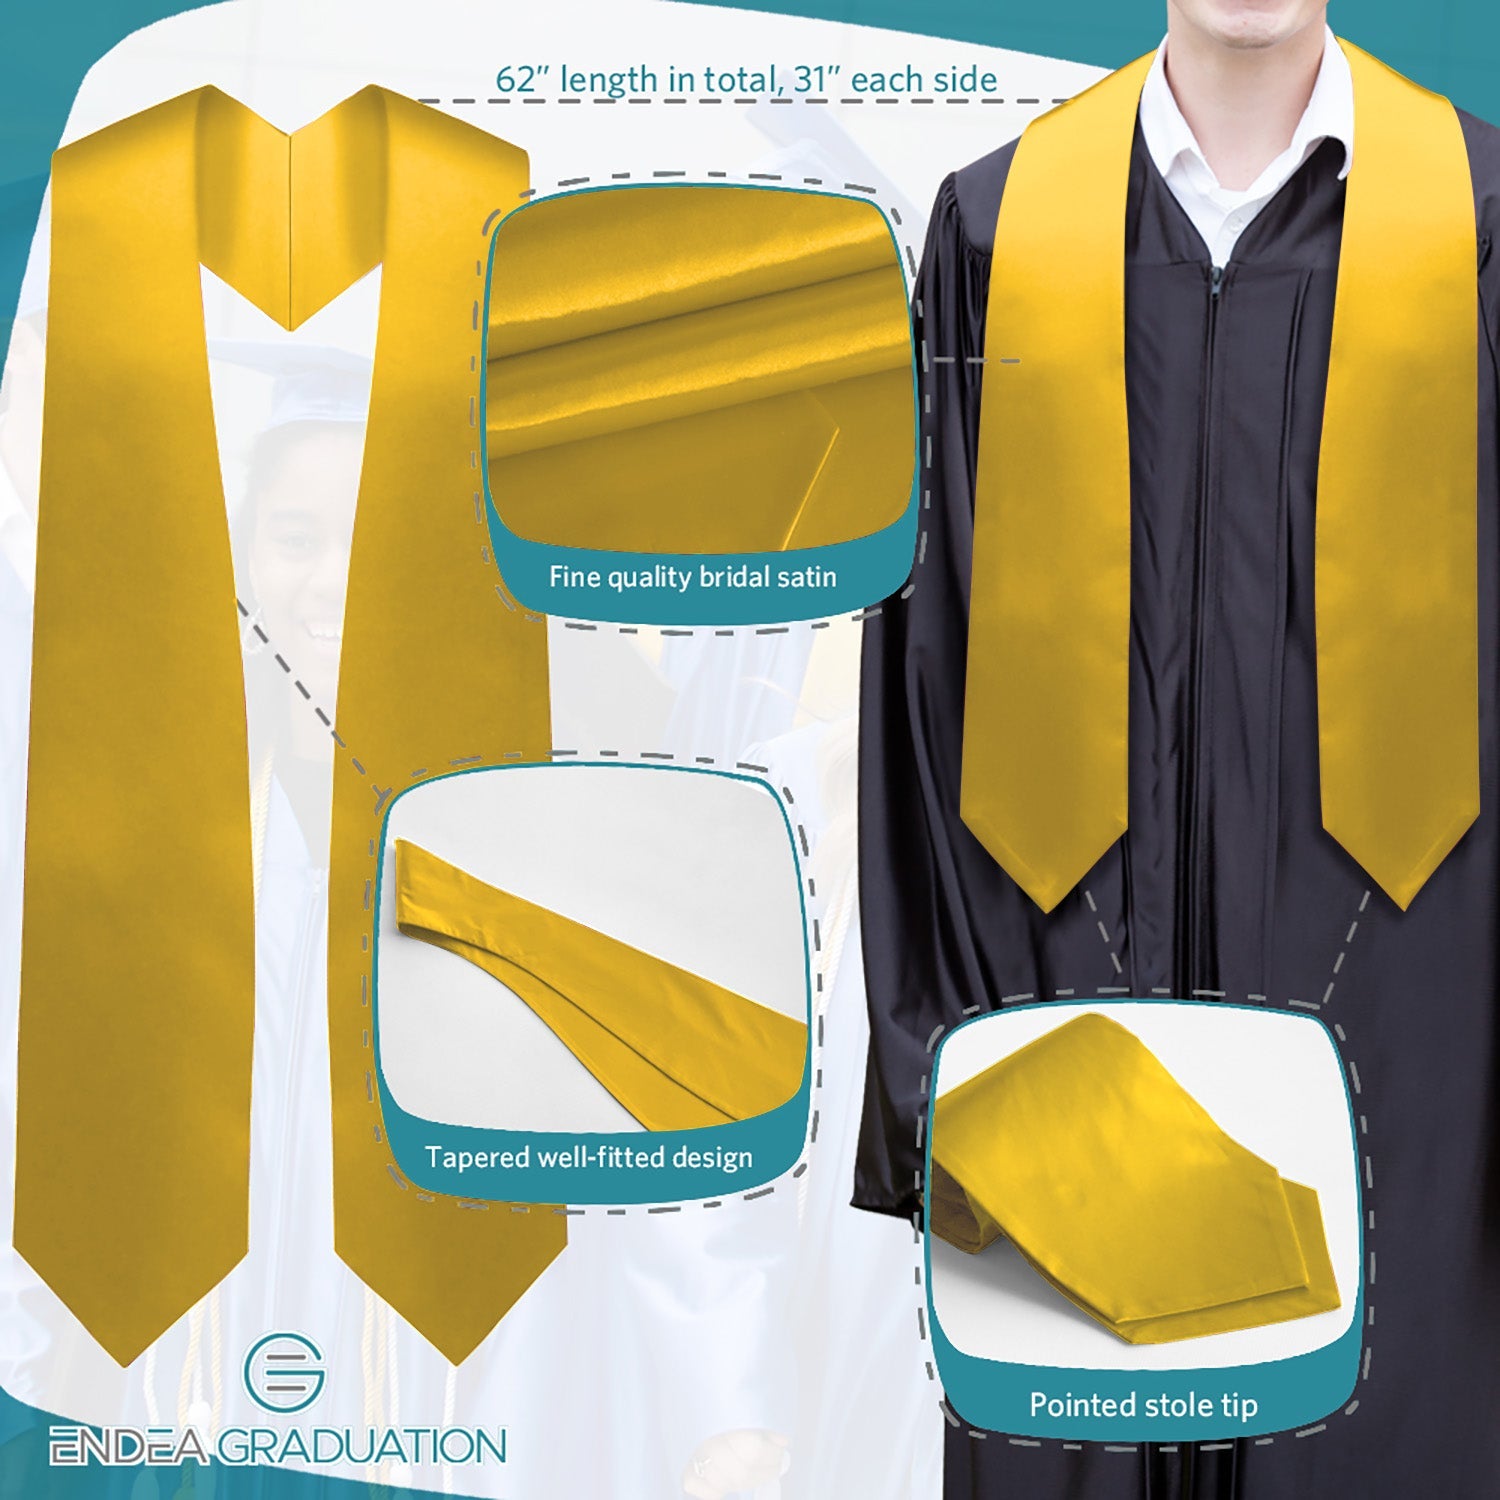 OUR COLLECTIONS | Convocation dress, Graduation attire, Academic regalia